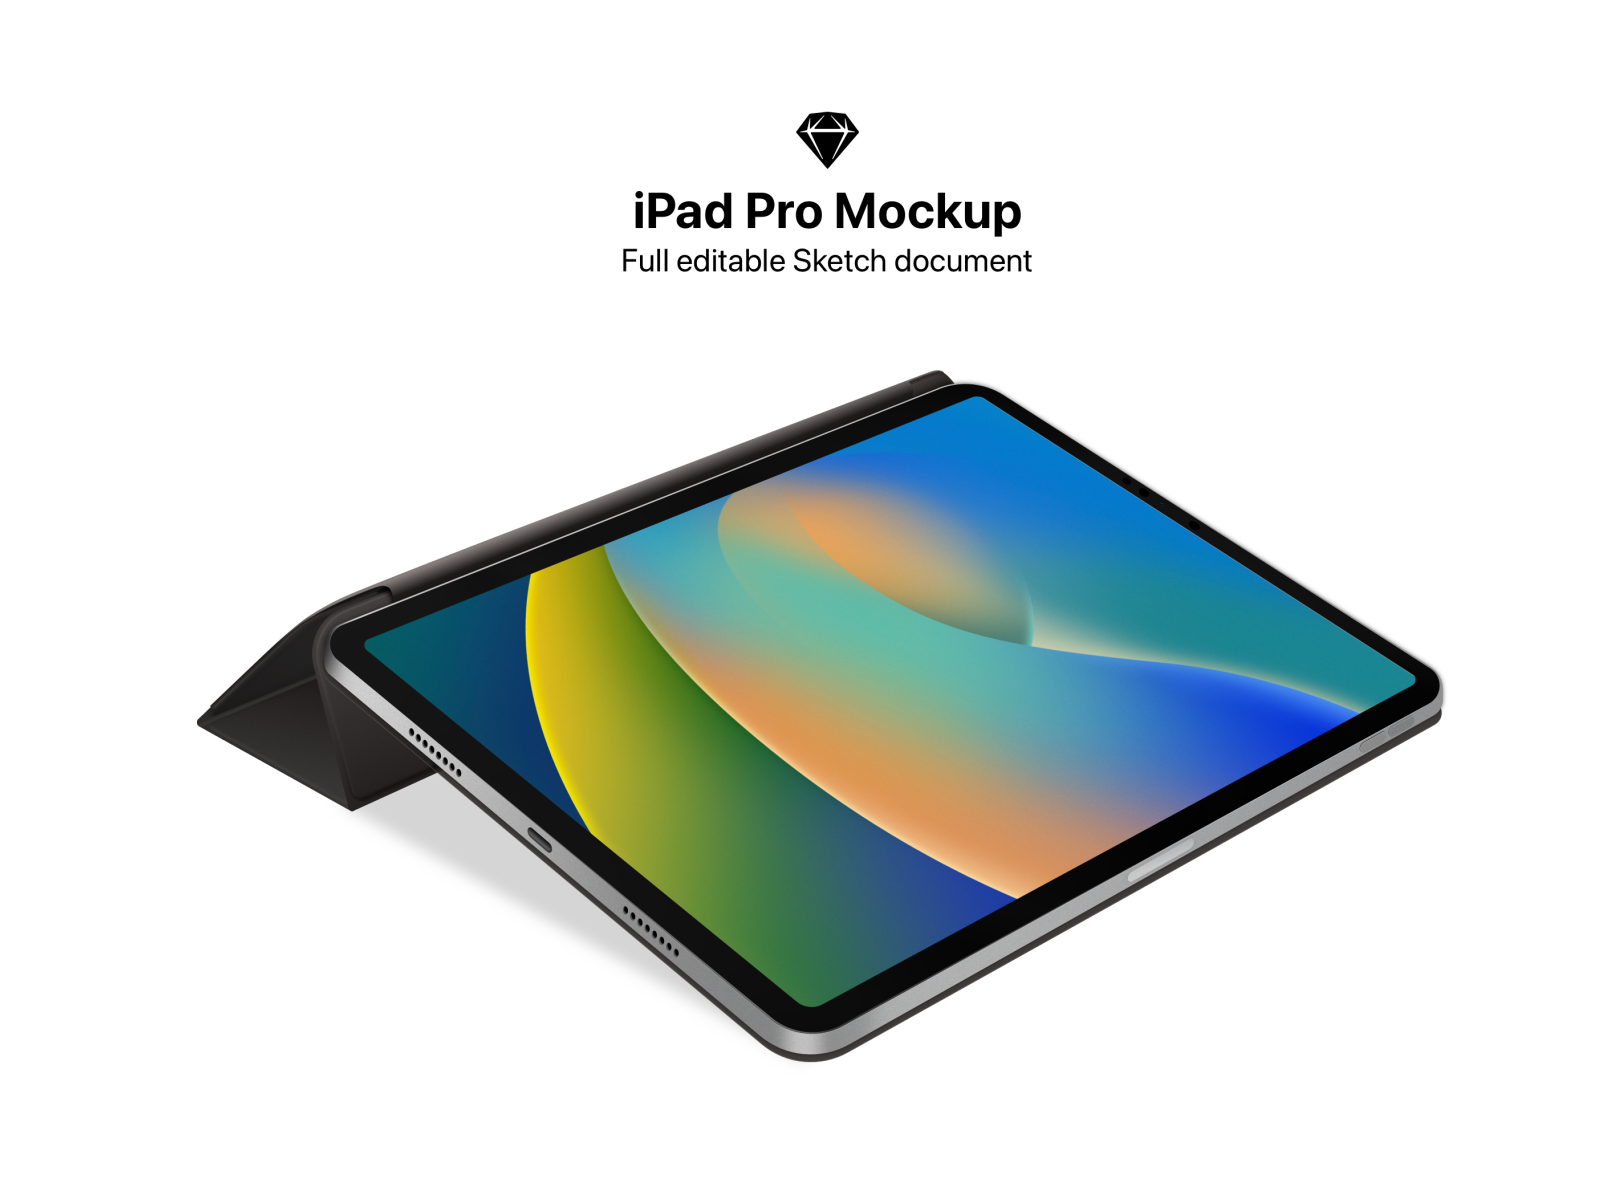 (Free) iPad Pro Mockup by Tiago Alexandrino on Dribbble